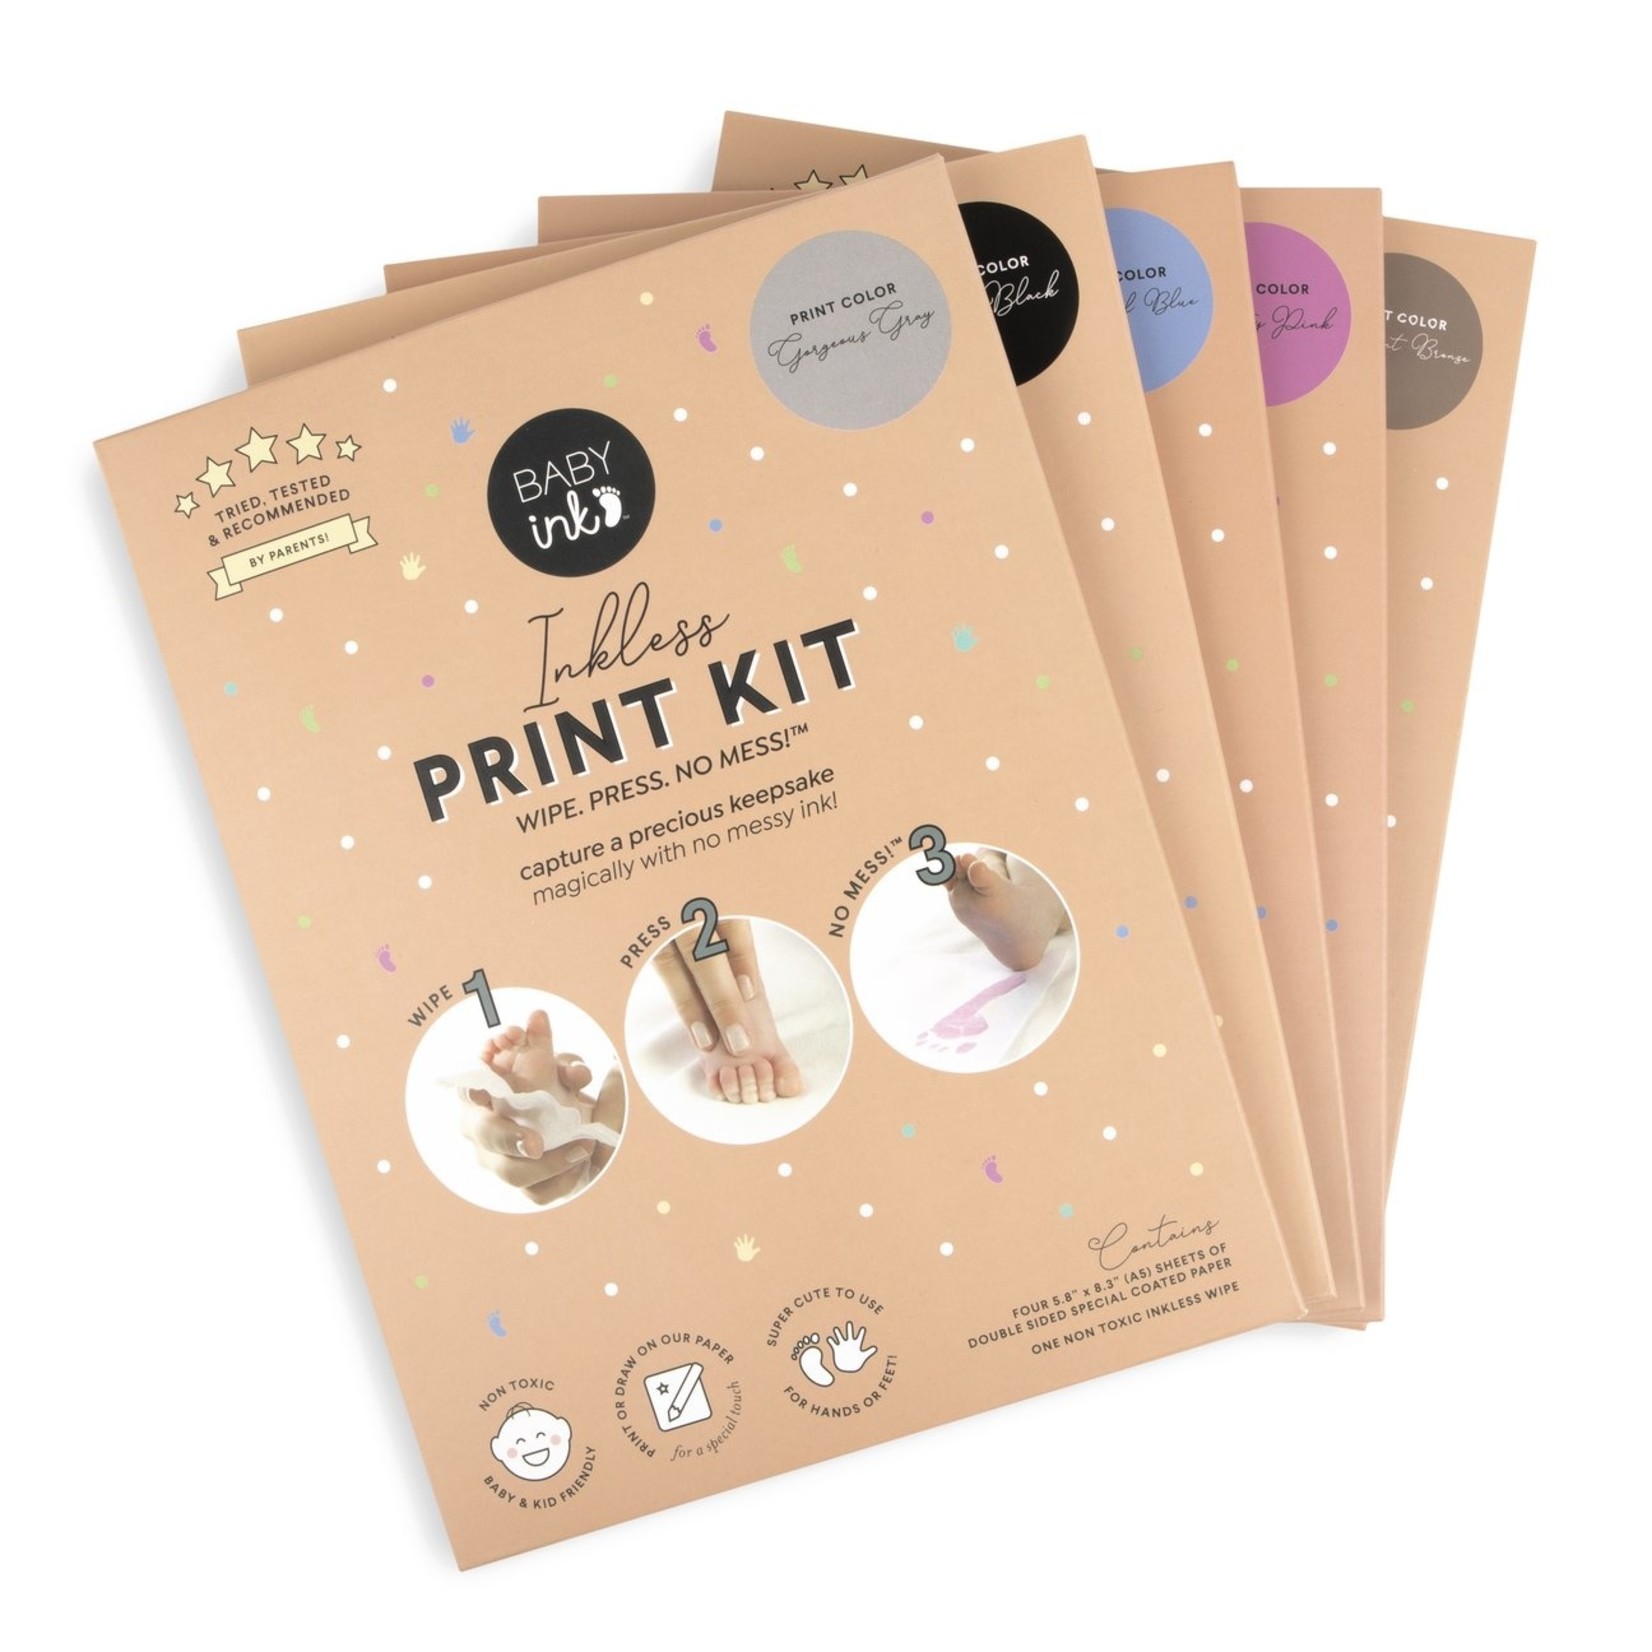 BABYink Baby Inc Ink-less Print Kit